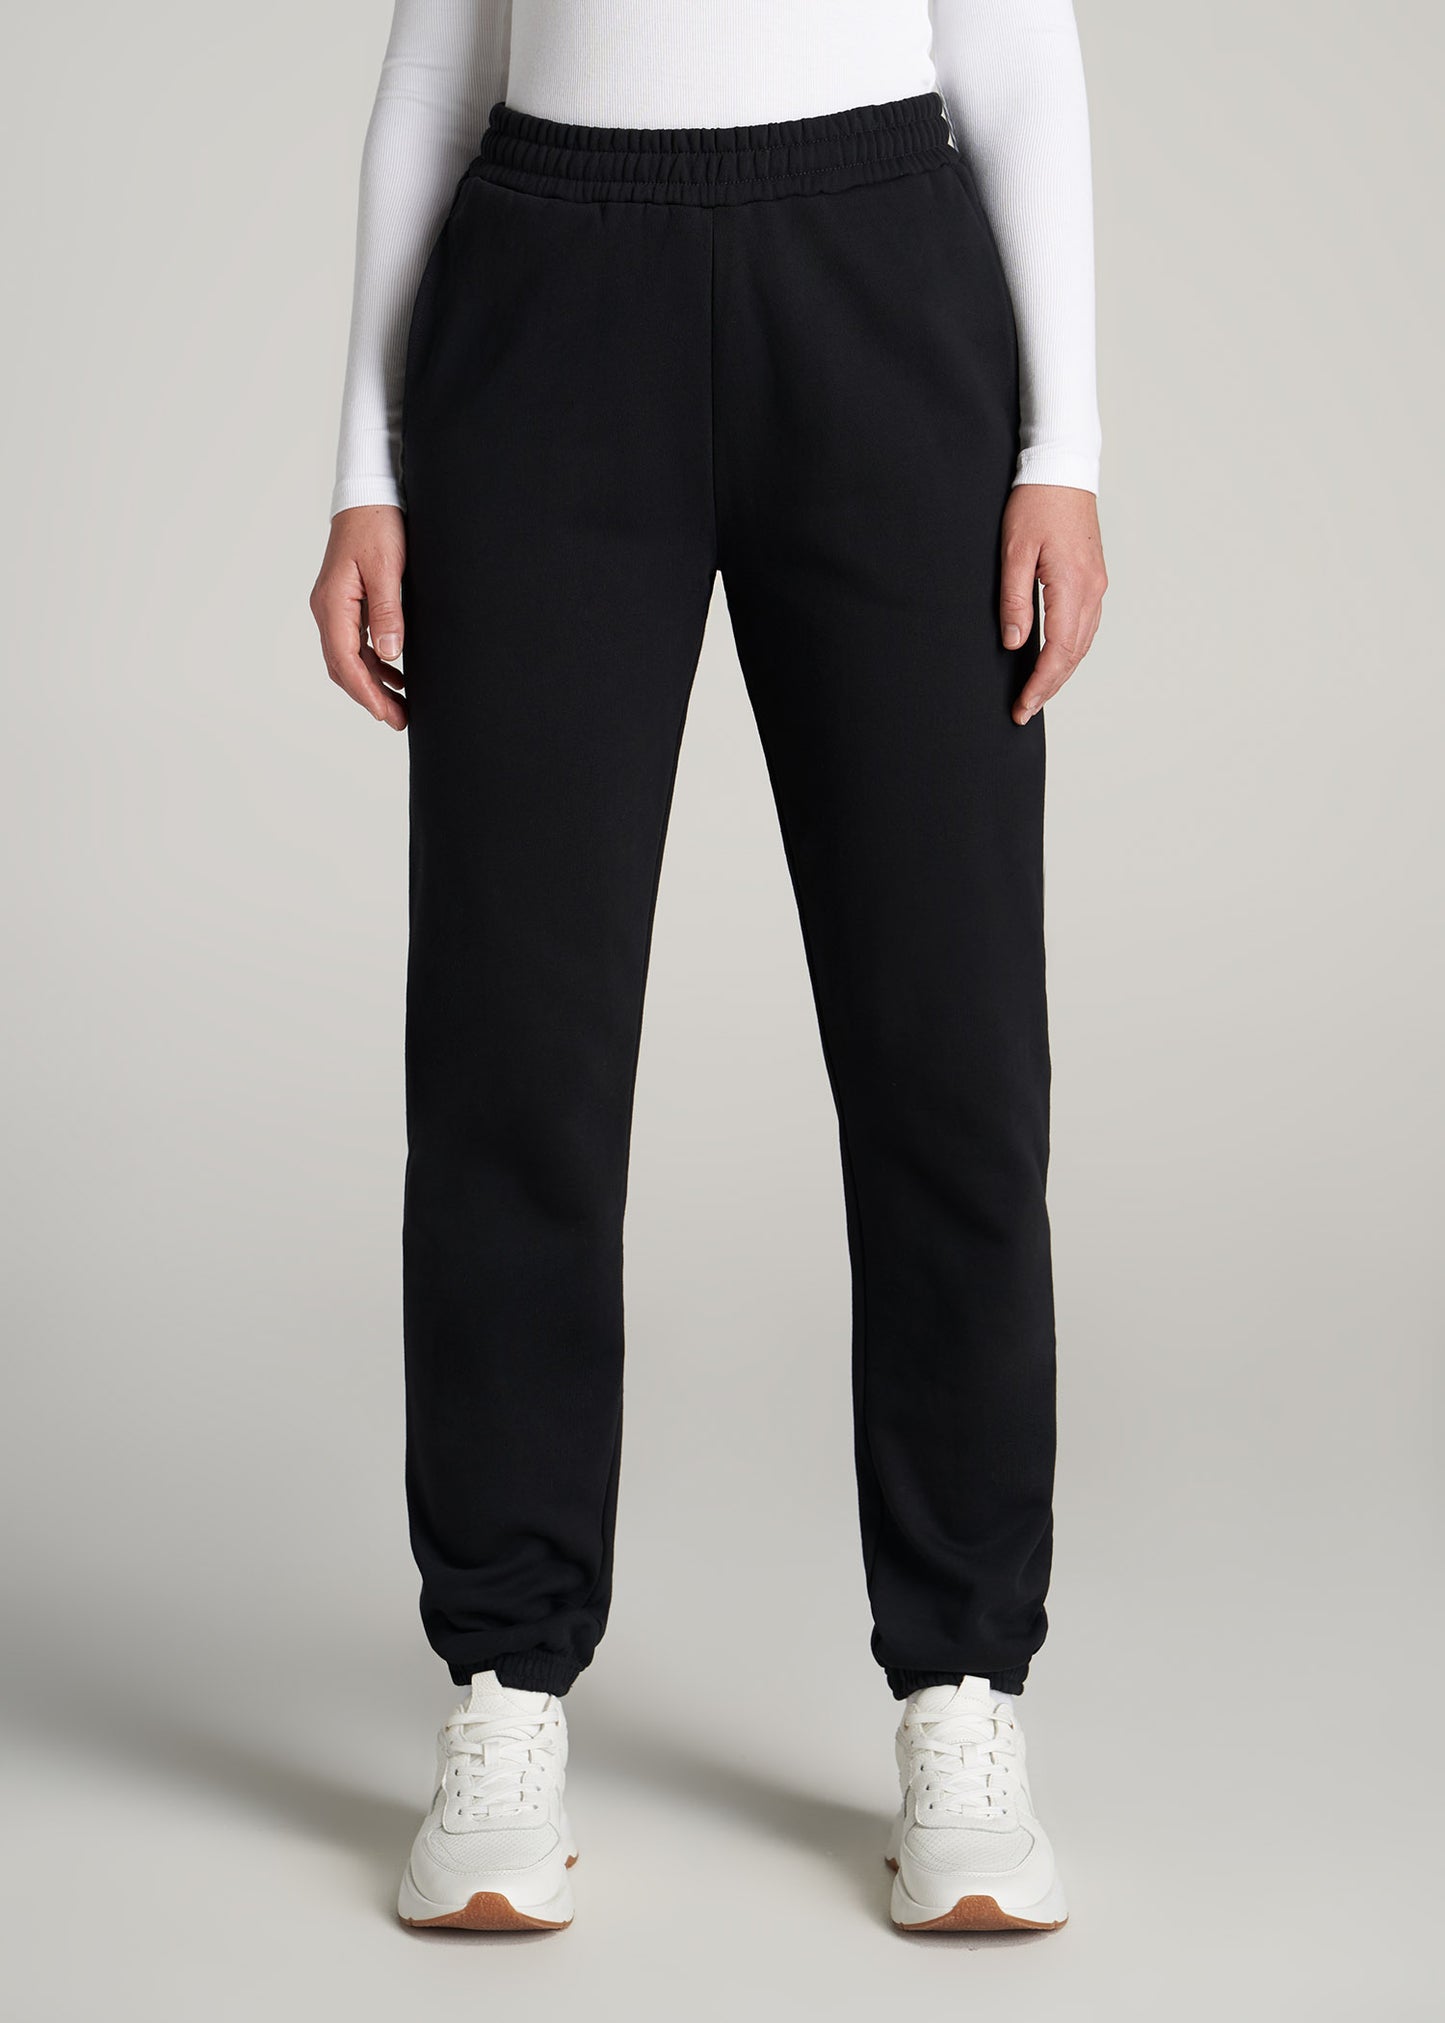  American-Tall-Women-WKND-Fleece-Relaxed-Sweatpants-Black-front